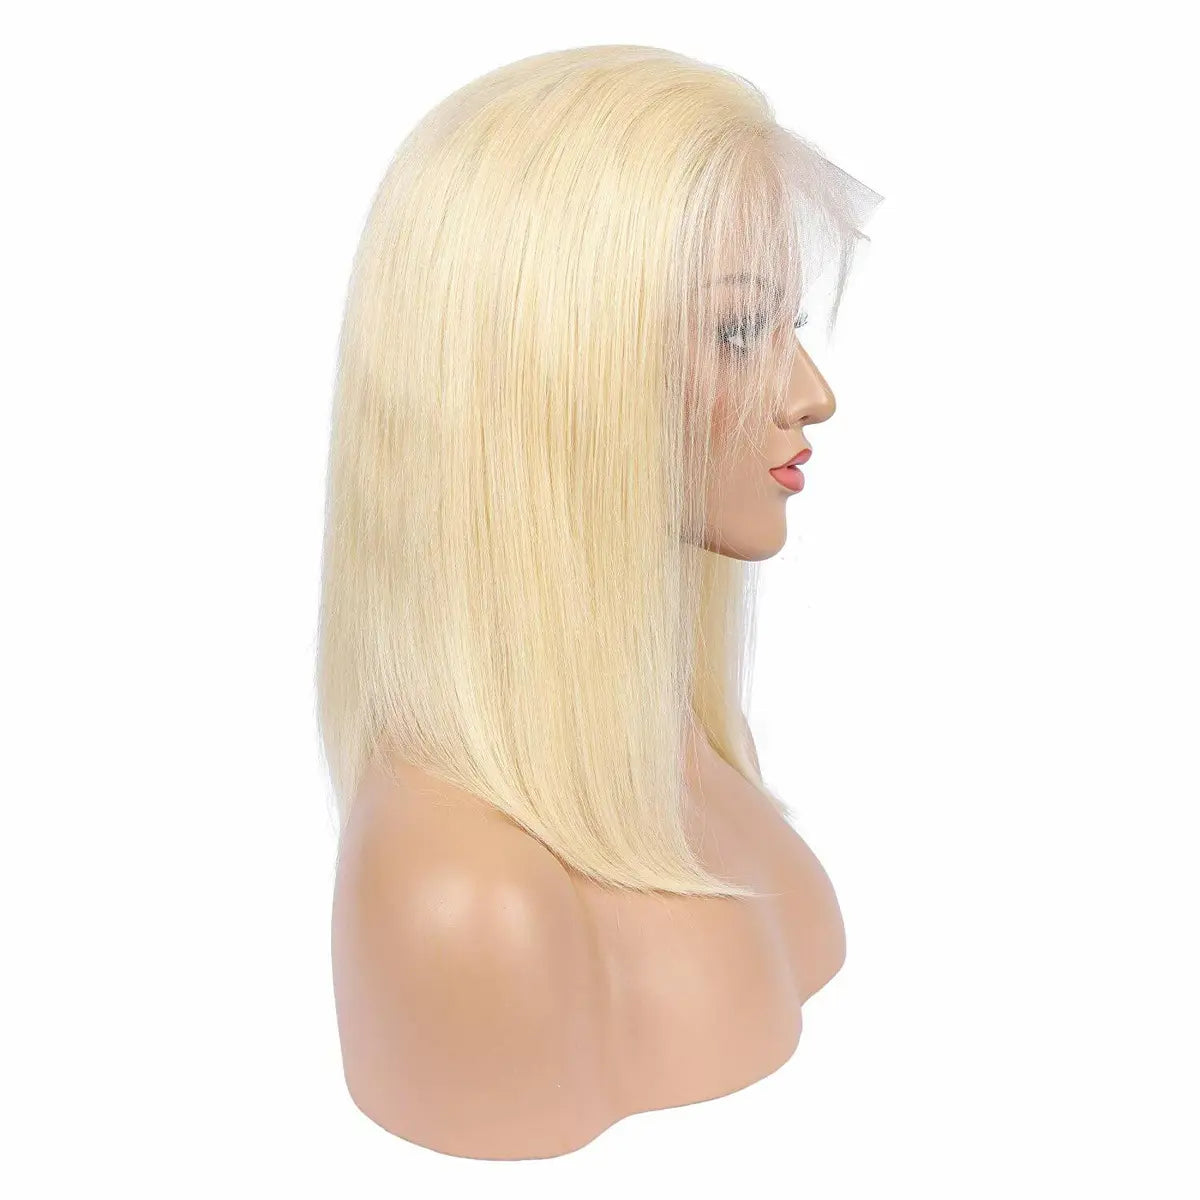 Blonde 613 Virgin Hair Straight